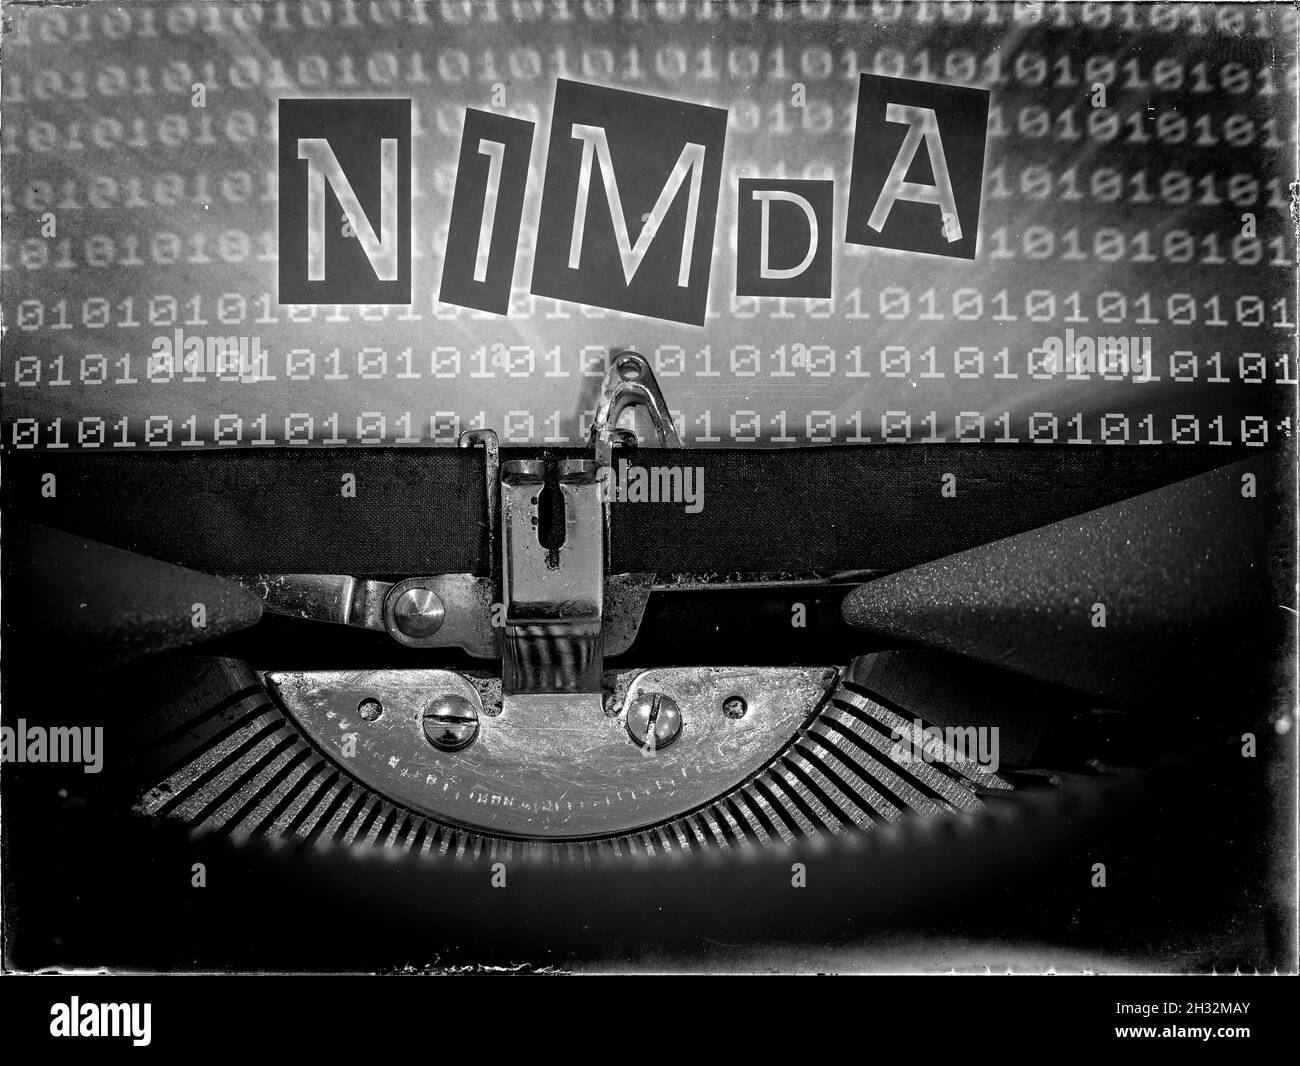 Nimda, Typewriter, Technology, Retrofuturism Stock Photo